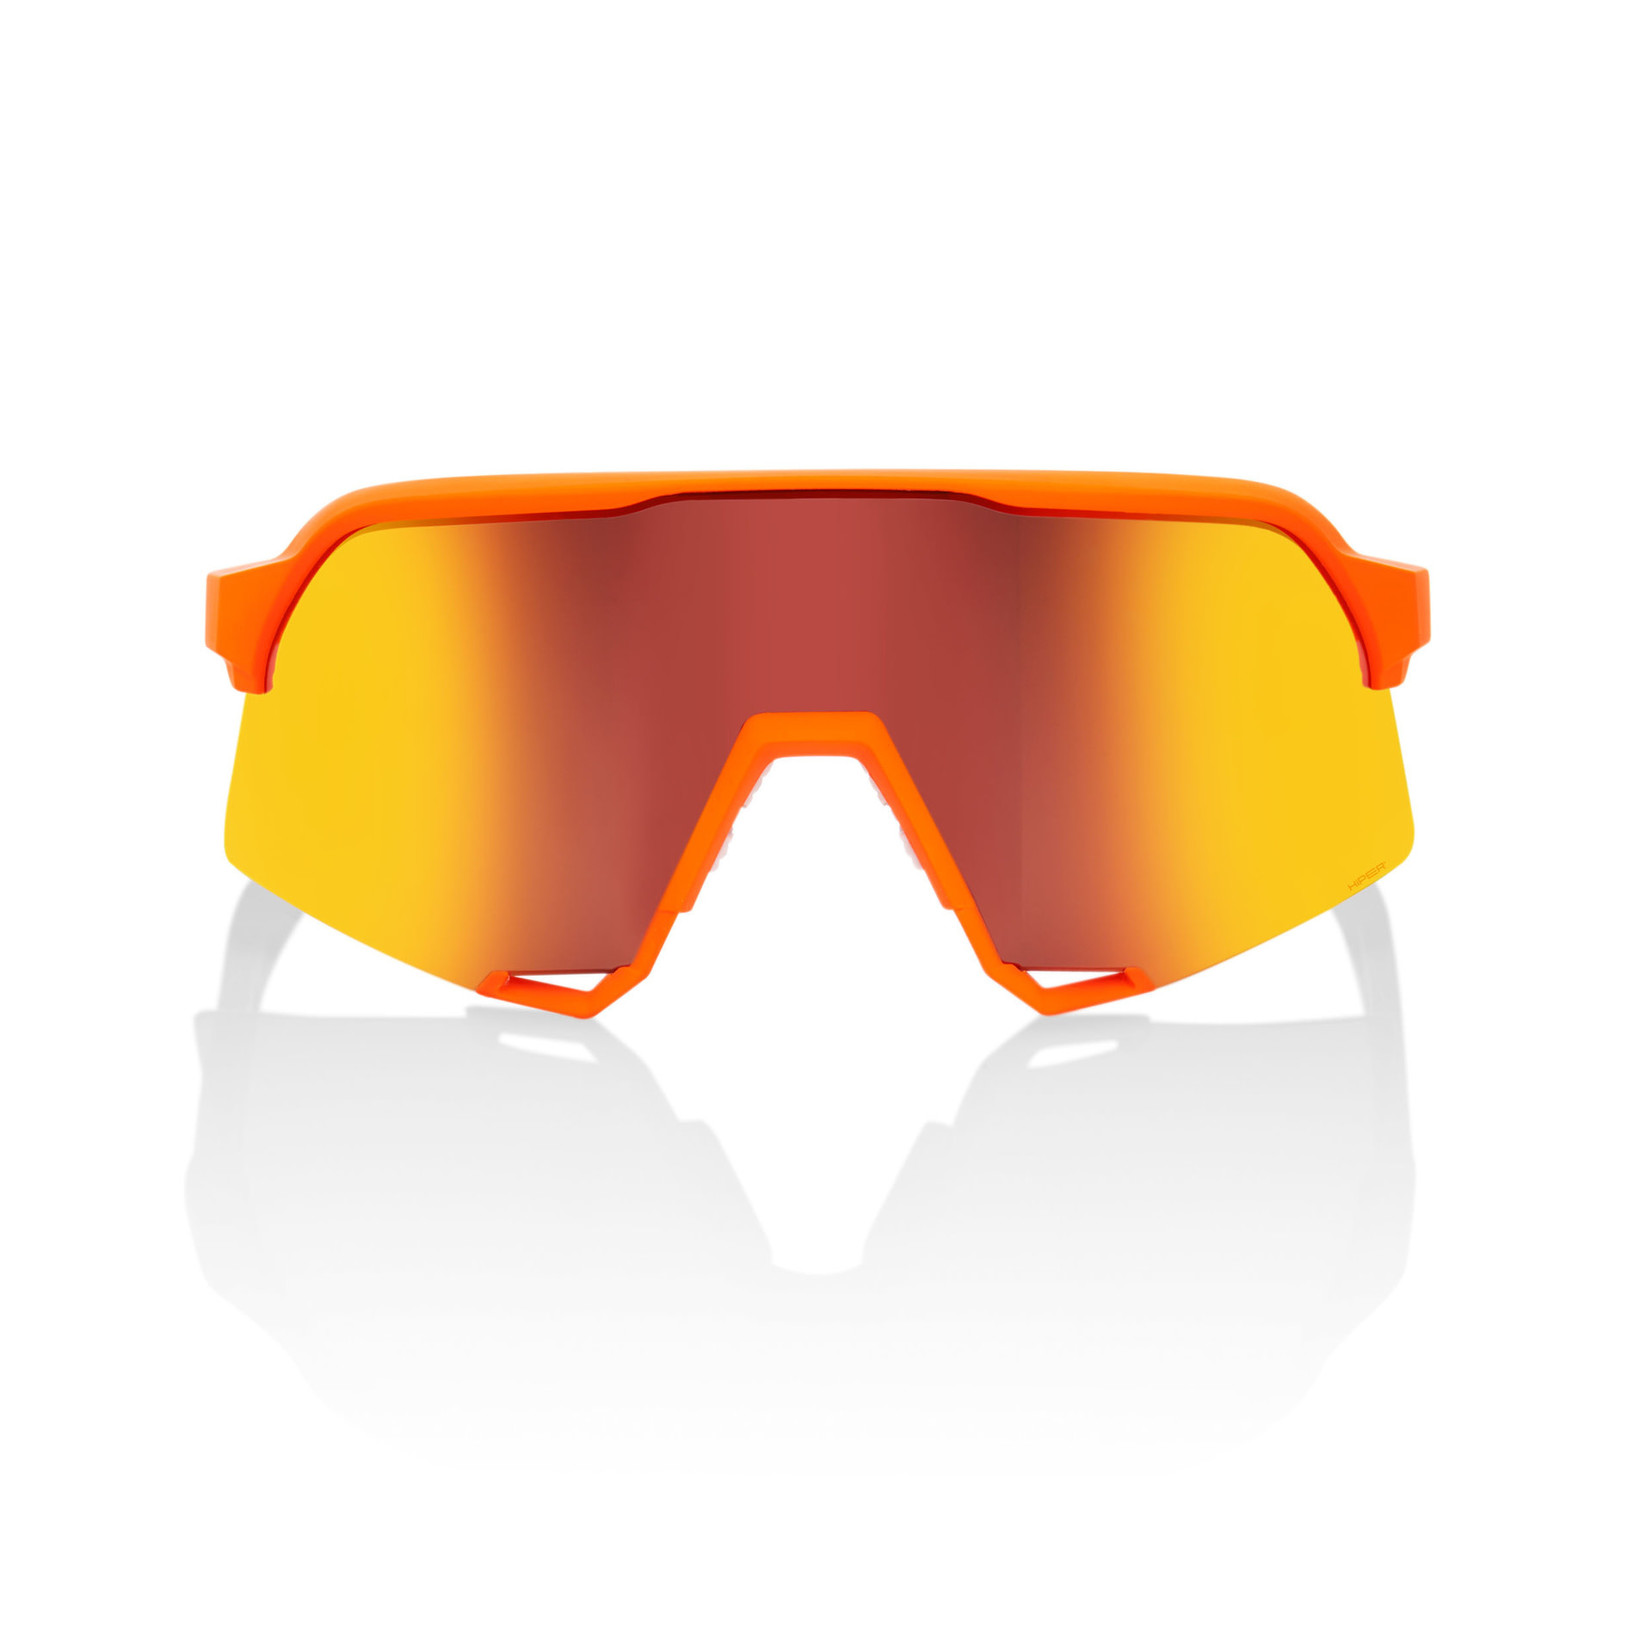 100 Percent 100% S3 Bike Eyewear - Soft Tact Neon Orange - Hiper Red Mirror